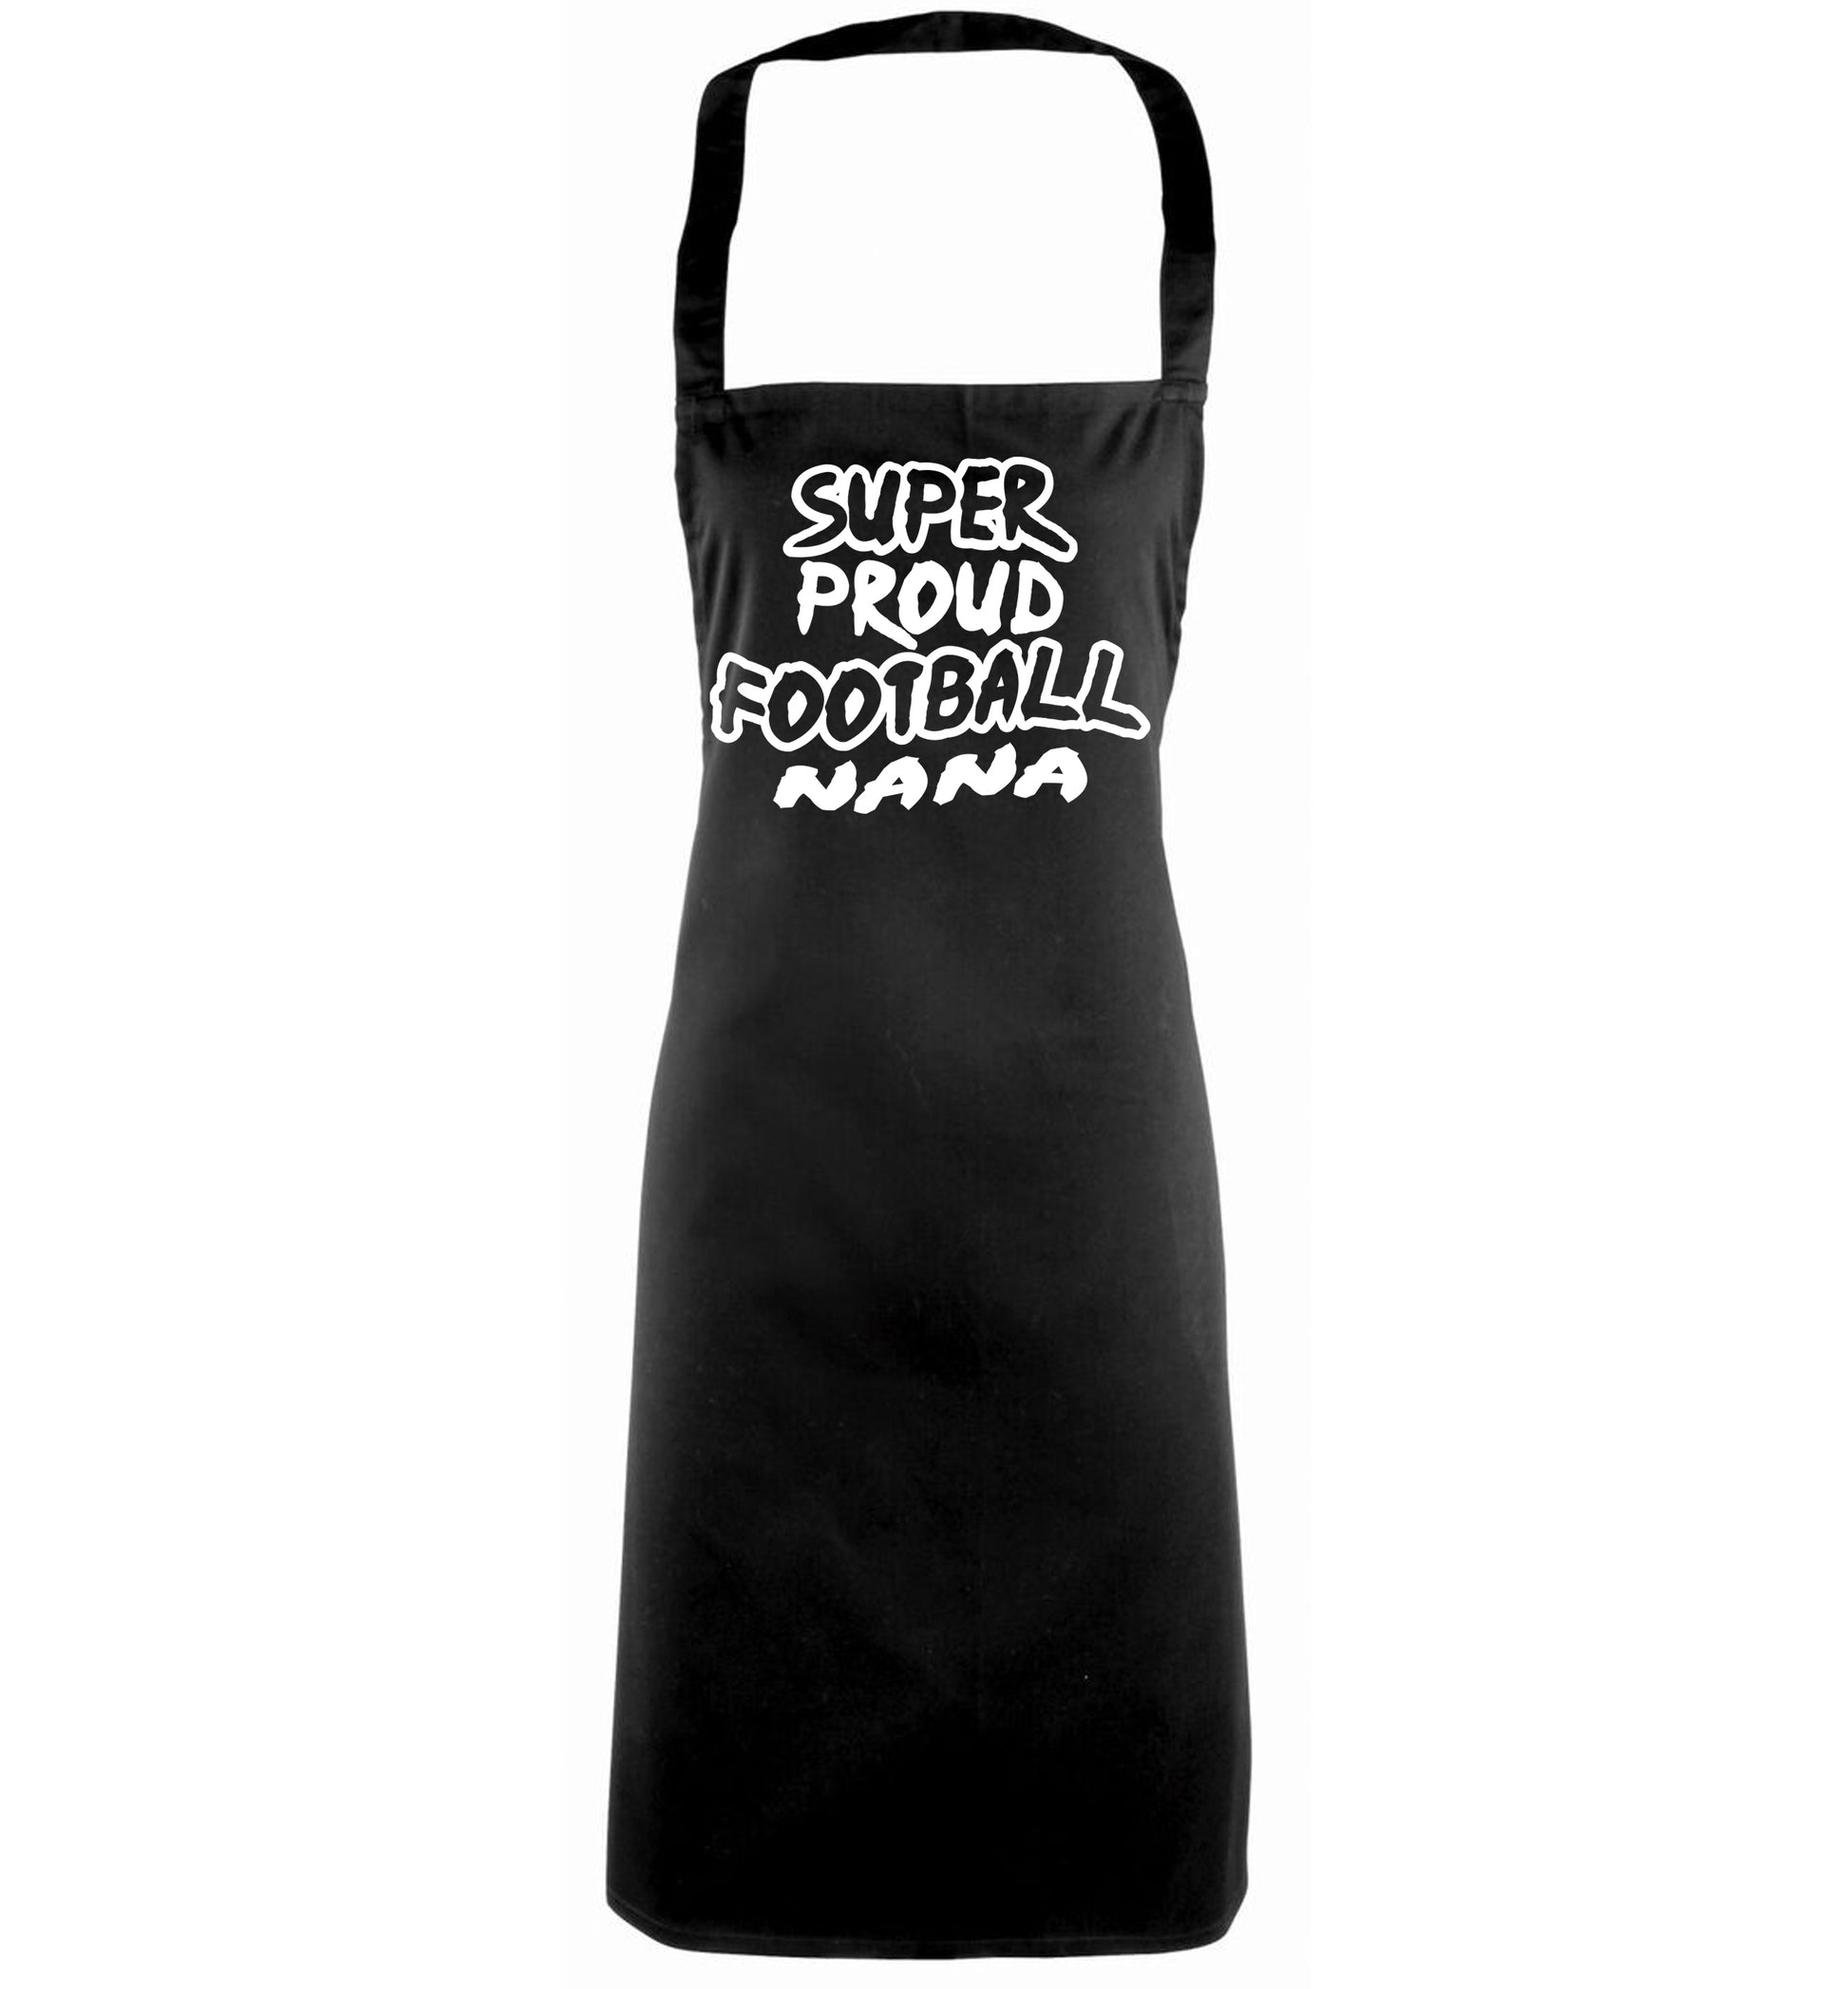 Super proud football nana black apron